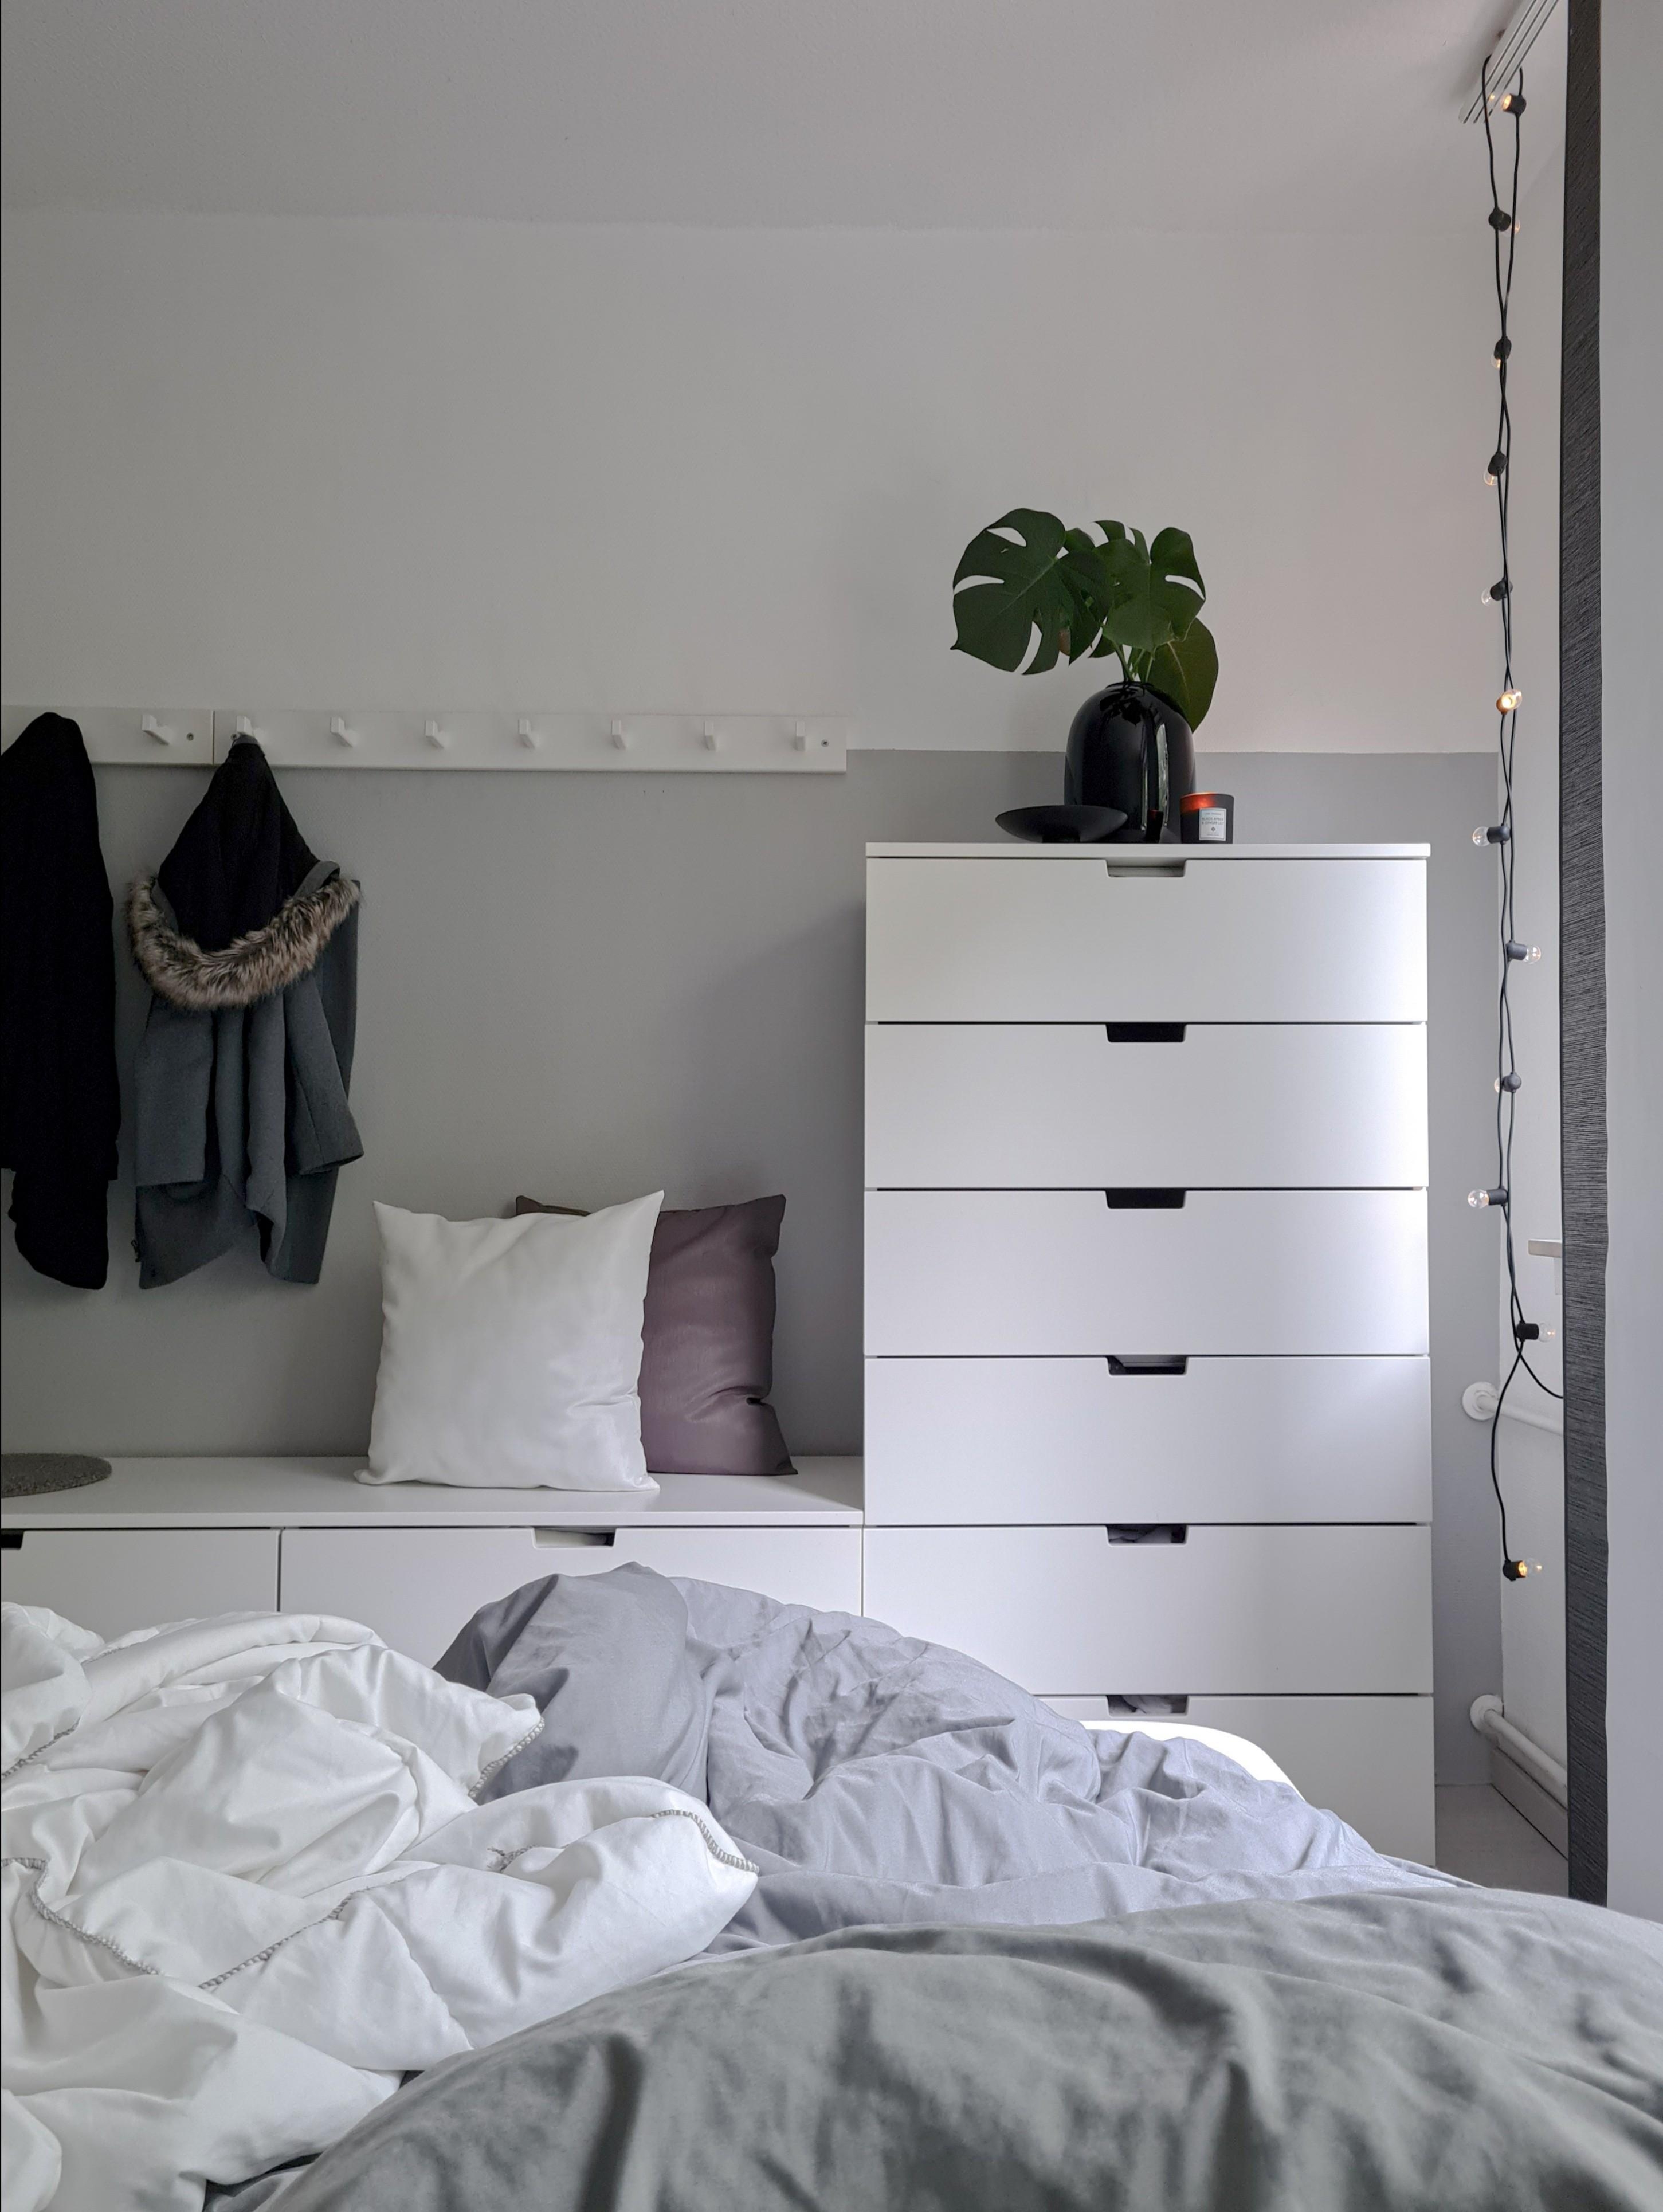 Kuschelwetter 🍂
#schlafzimmer #bedroom #bett #kuschelig #hygge #kommode #kleiderschrank